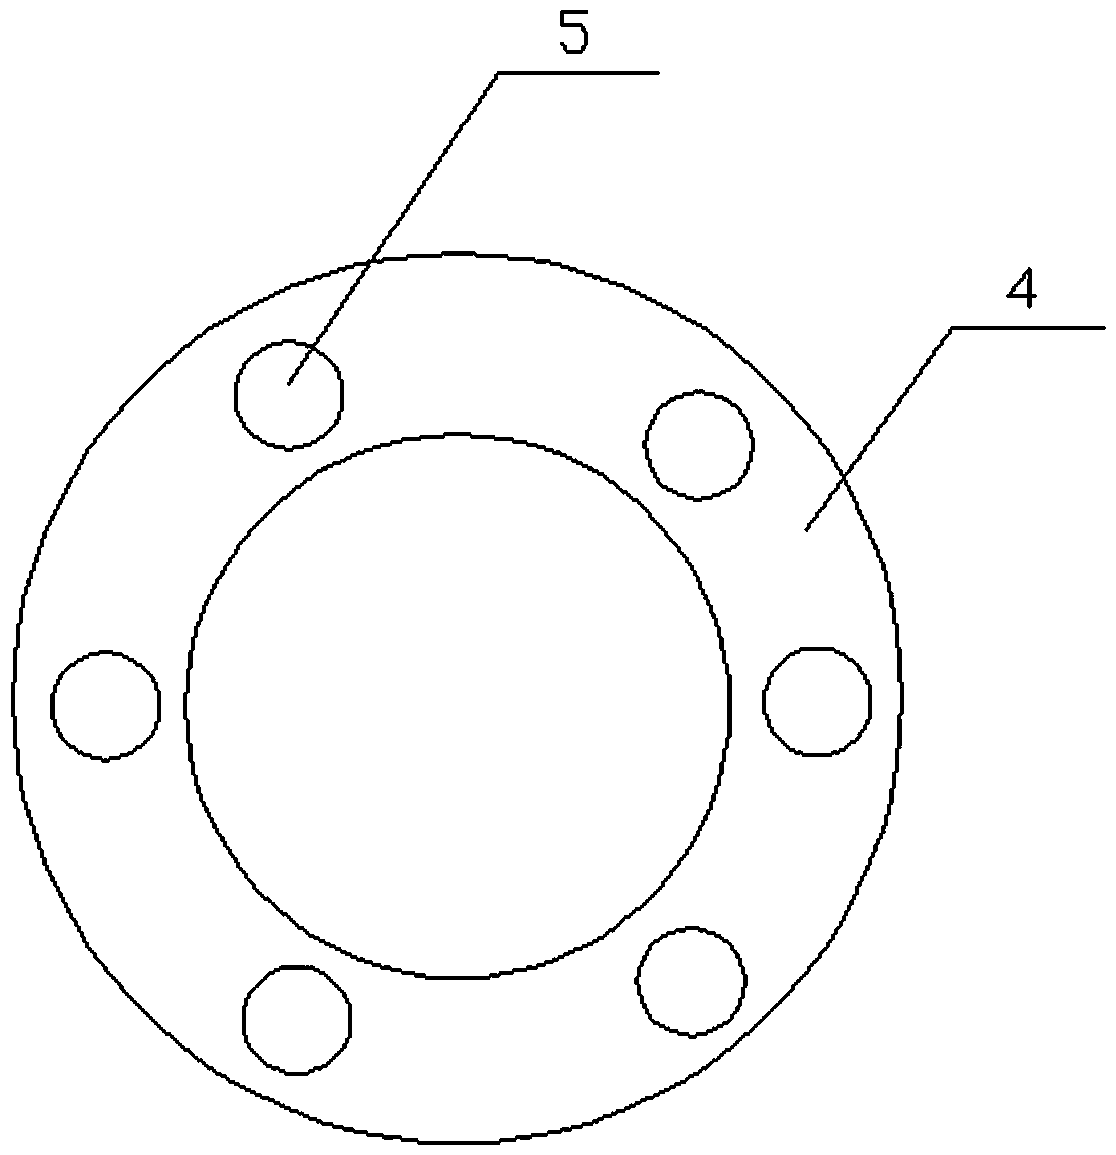 Thrust ball bearing and excavator including thrust ball bearing